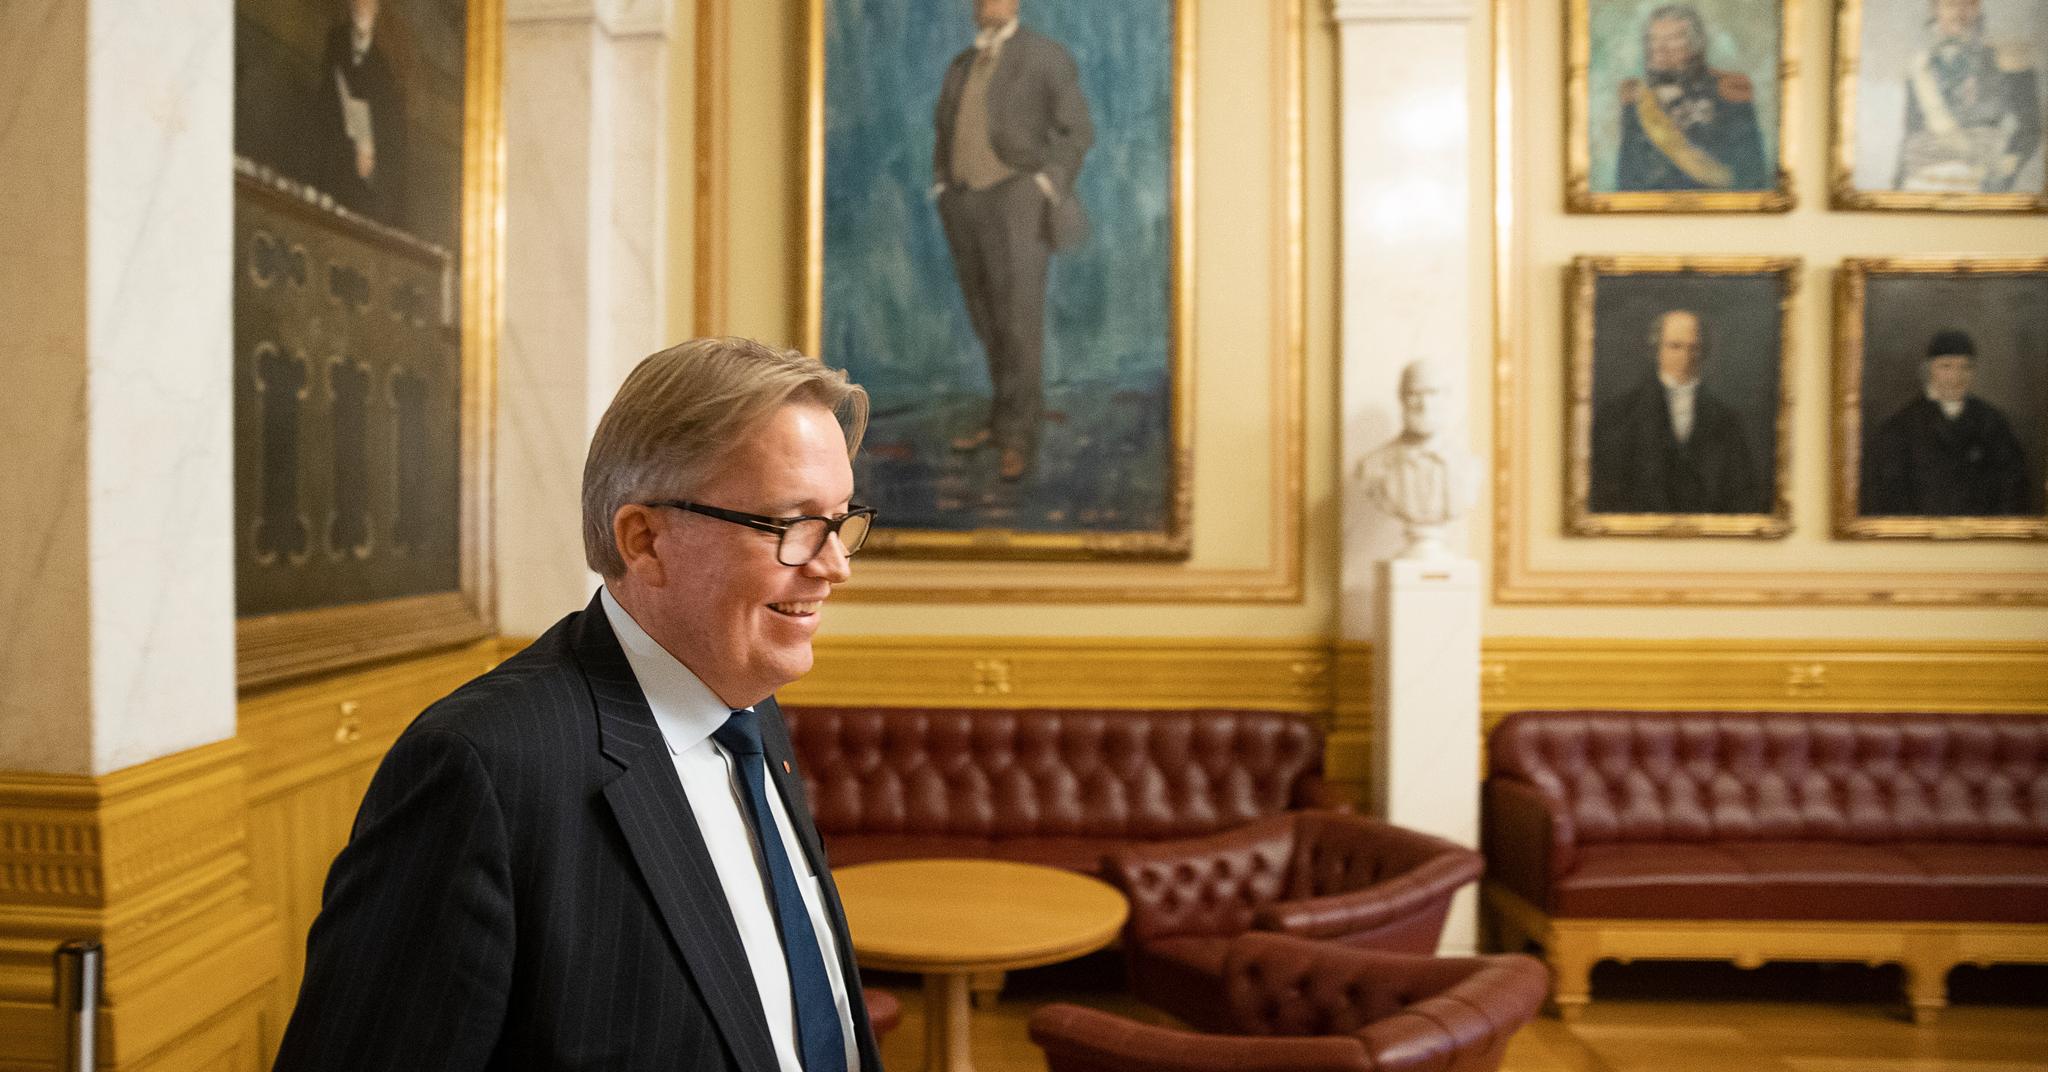 Arbeiderpartiets Sverre Myrli kom inn på Stortinget i 1997. Onsdag var han skuffet over at han ikke nådde opp som partiets kandidat til ny stortingspresident.